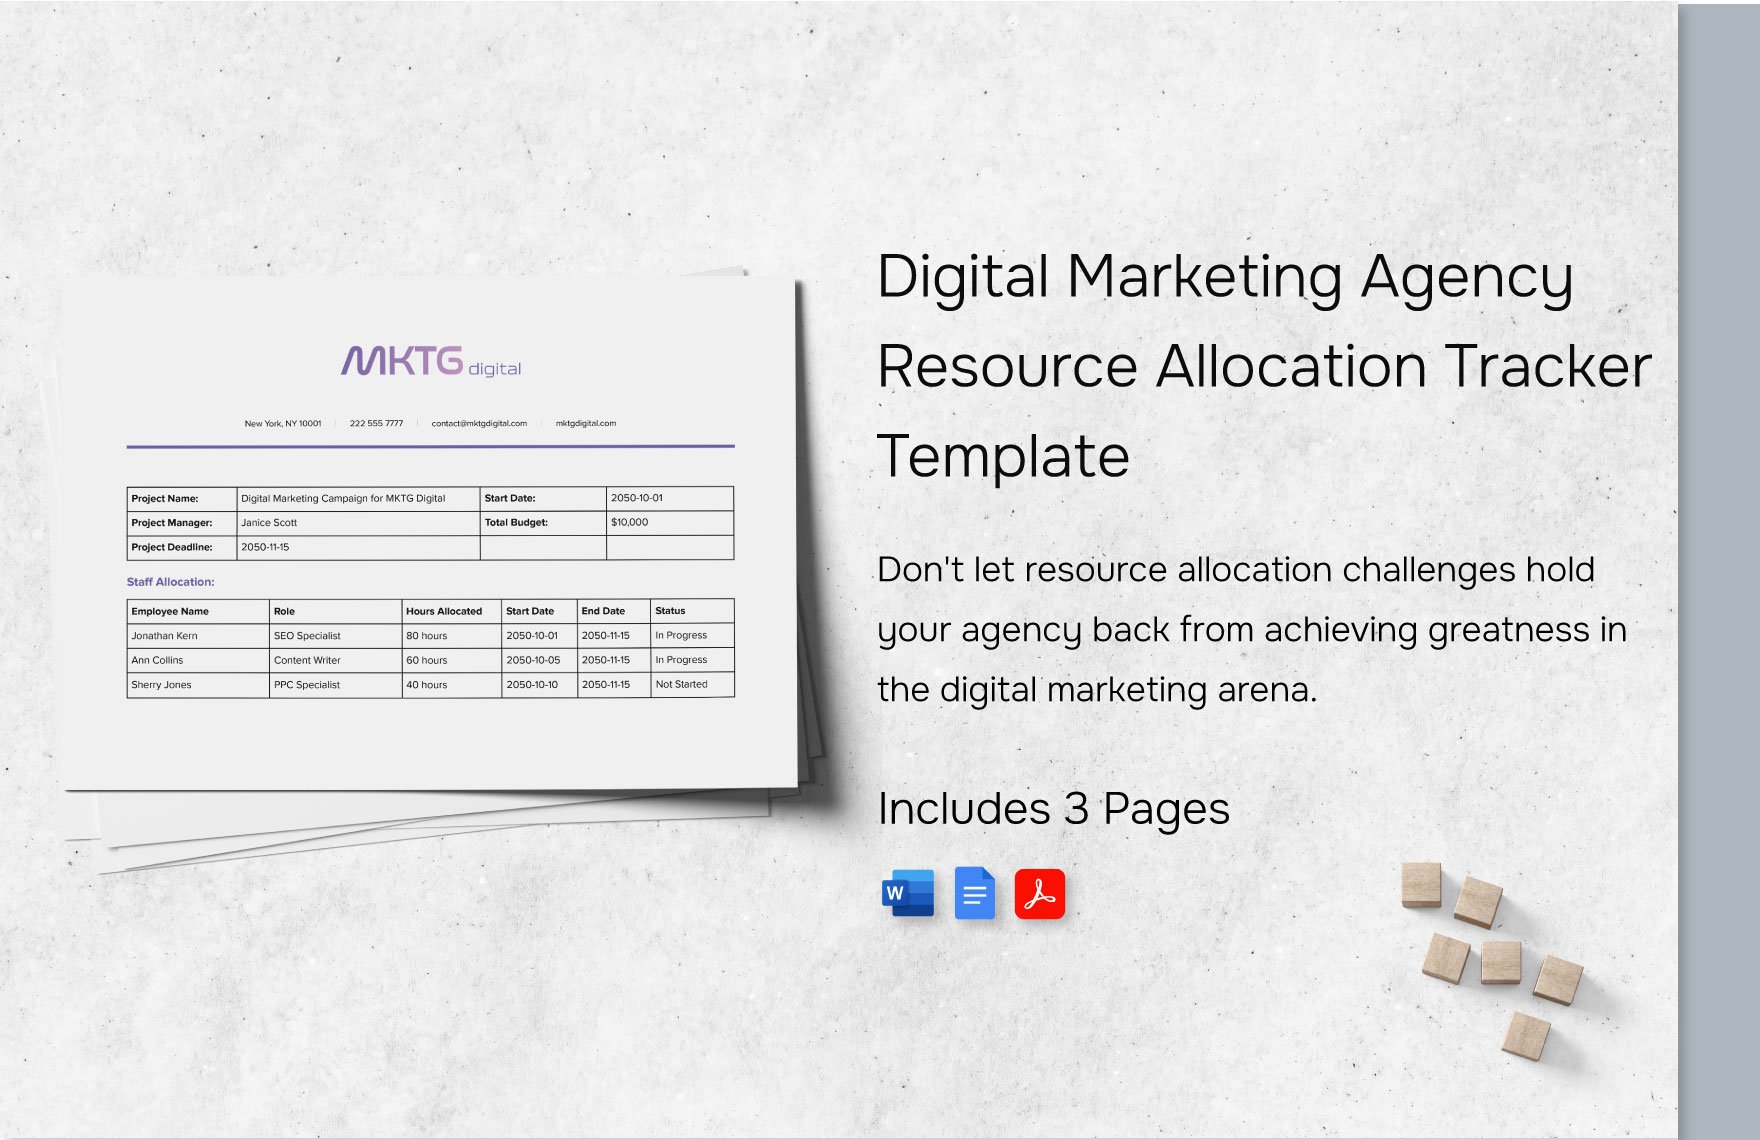 Digital Marketing Agency Resource Allocation Tracker Template